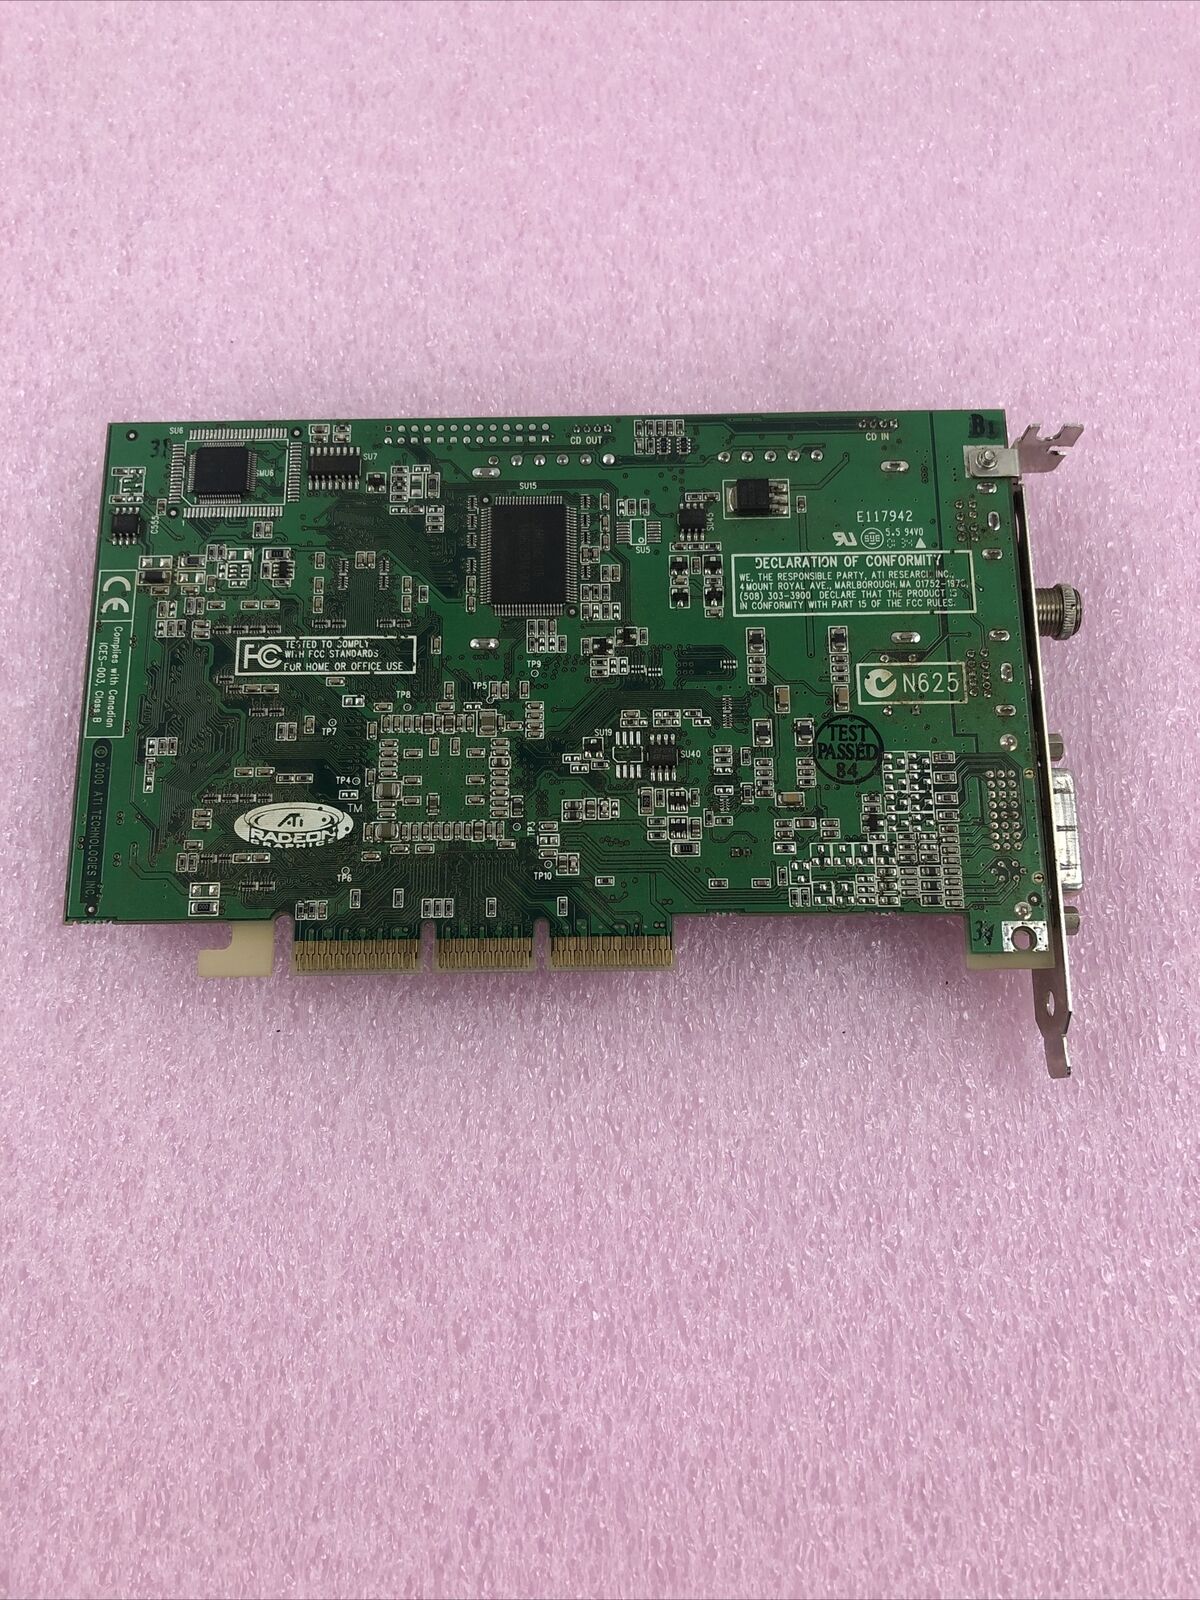 AGP card ATI Radeon 32M F11236 Mk2/PH 109-73700-30 1027370131 DVI Vid-out Video